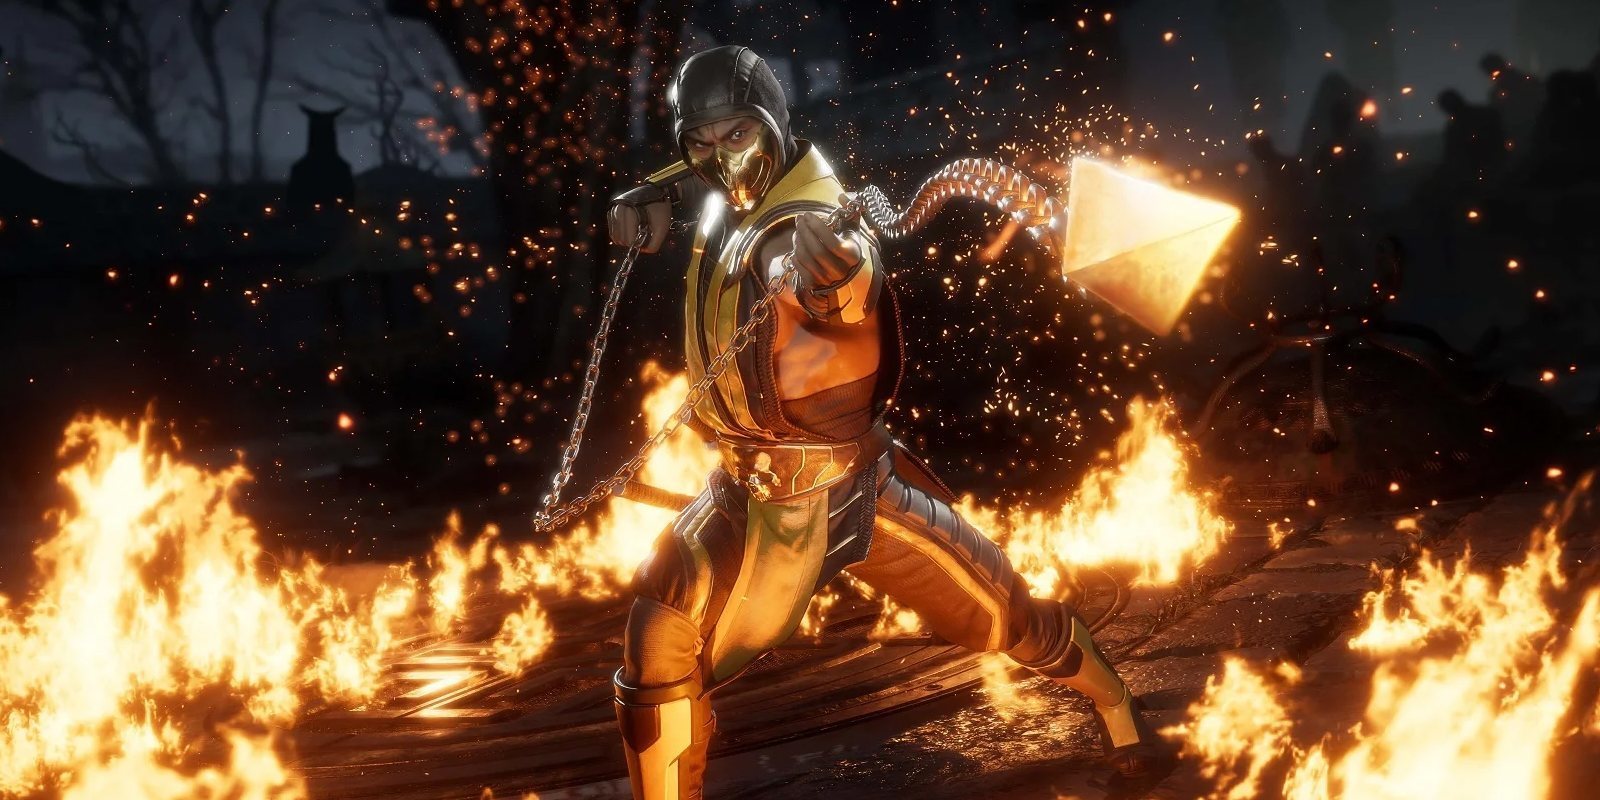 Filtrados más detalles de 'Mortal Kombat XI'